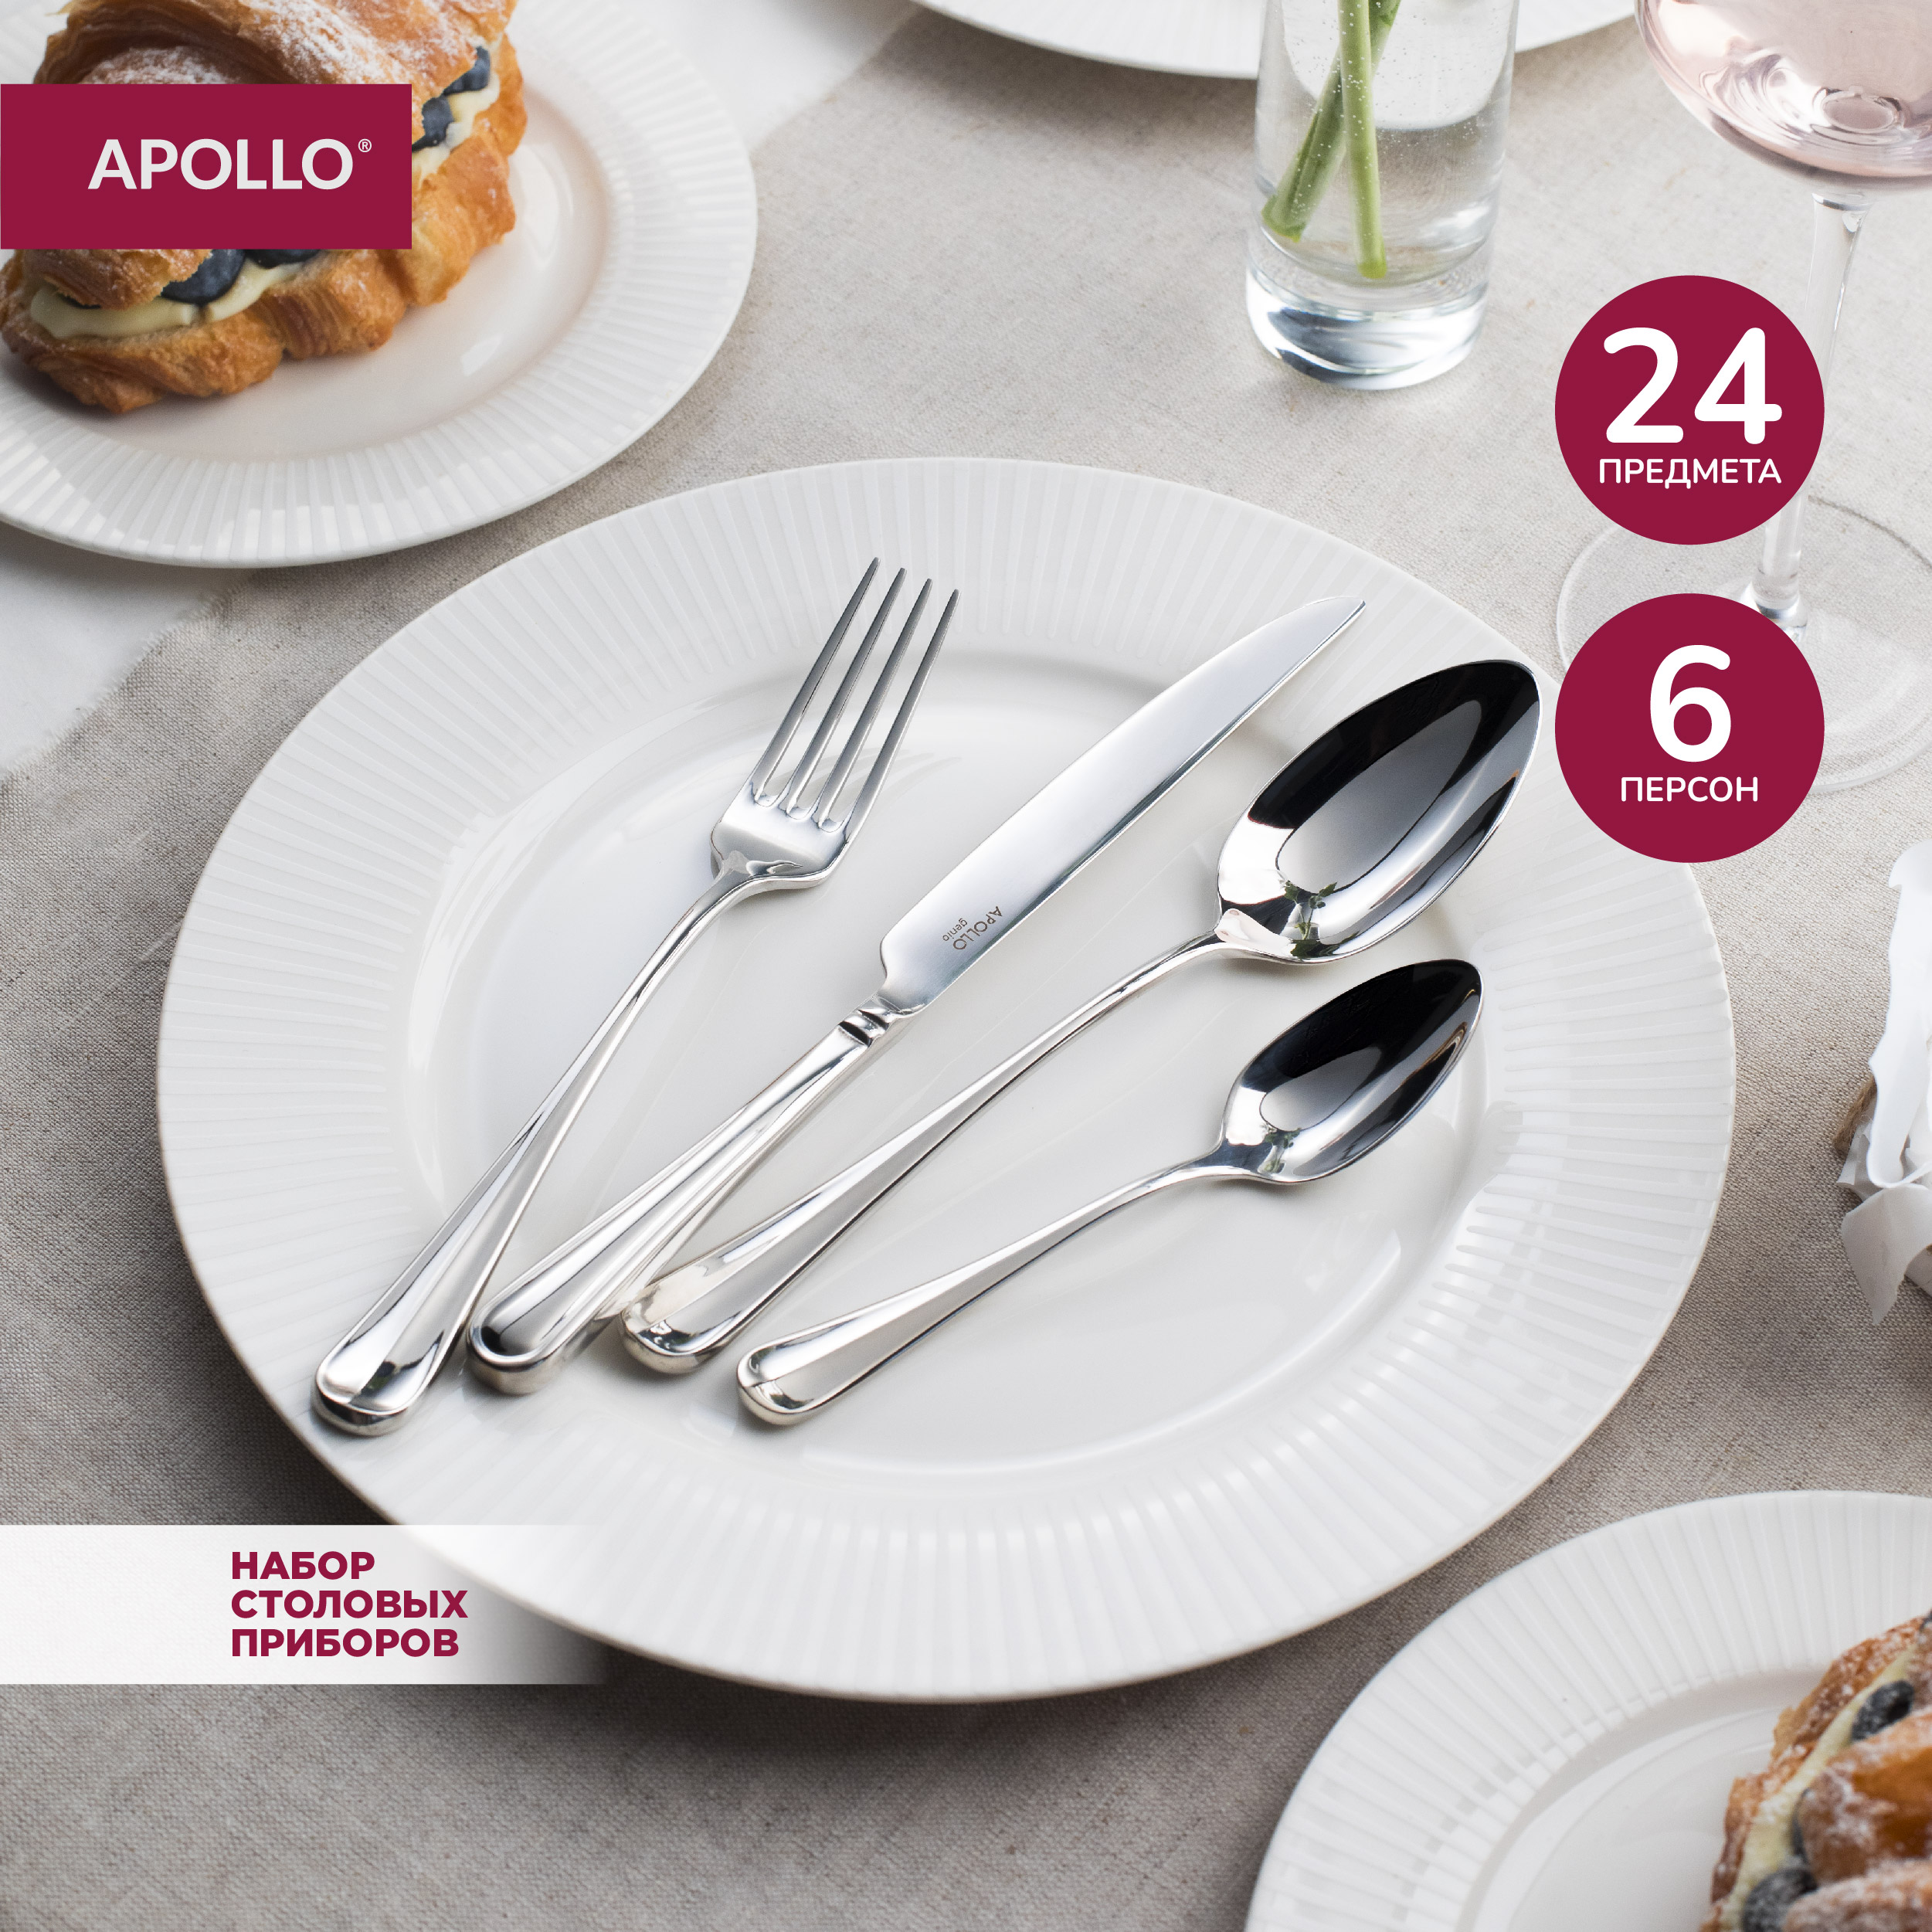 Набор столовых приборов Apollo на 6 персон 24 предмета 